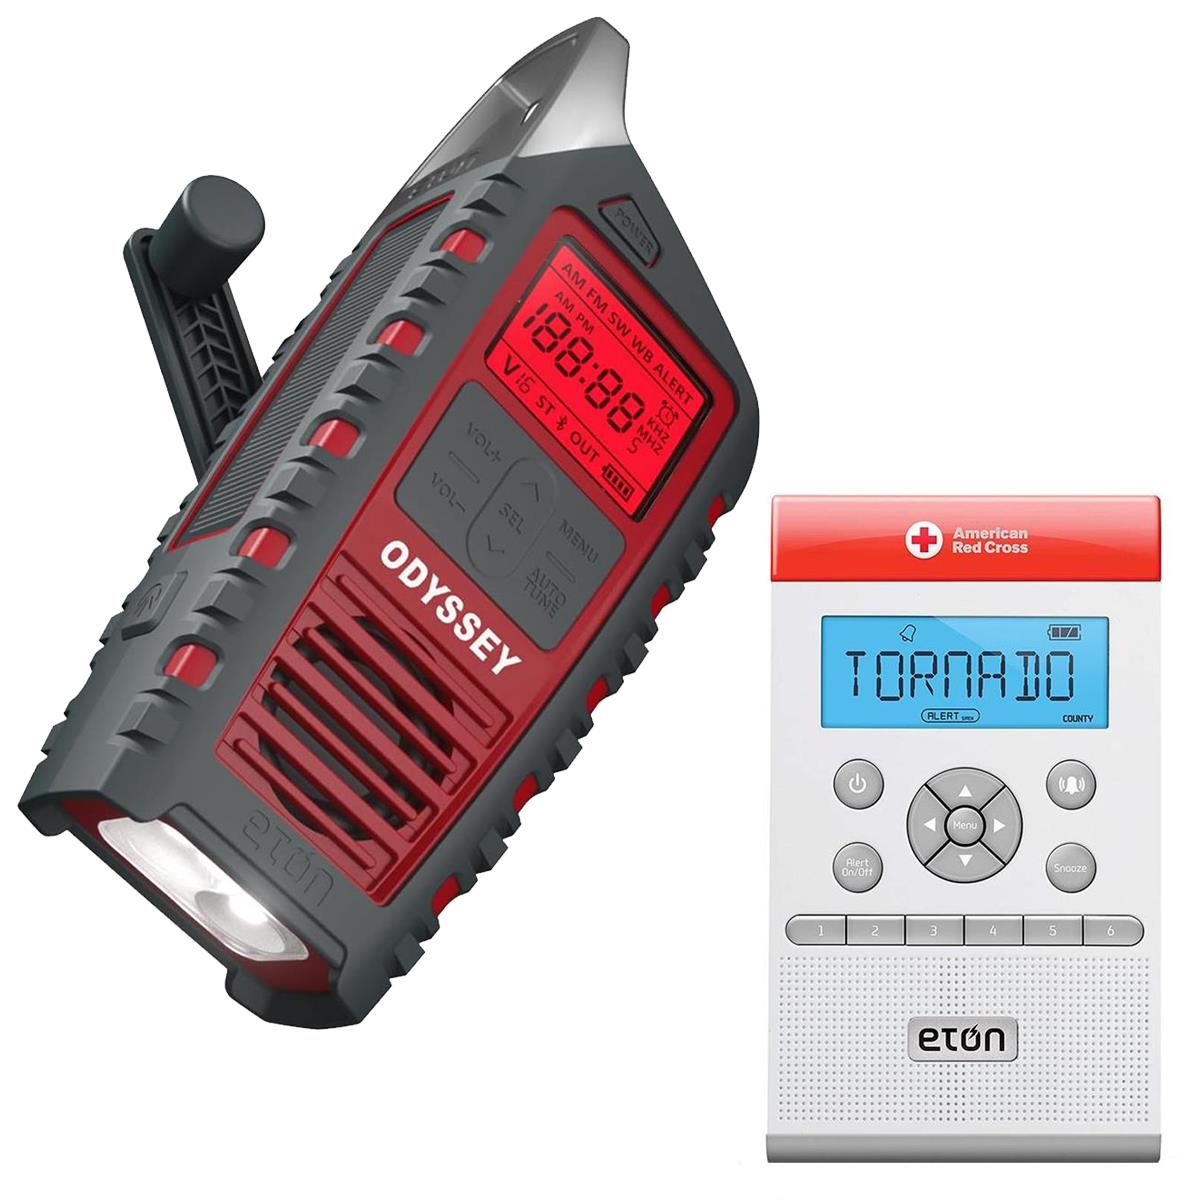 Image of Eton American Red Cross ZoneGuard Weather Alert Radio